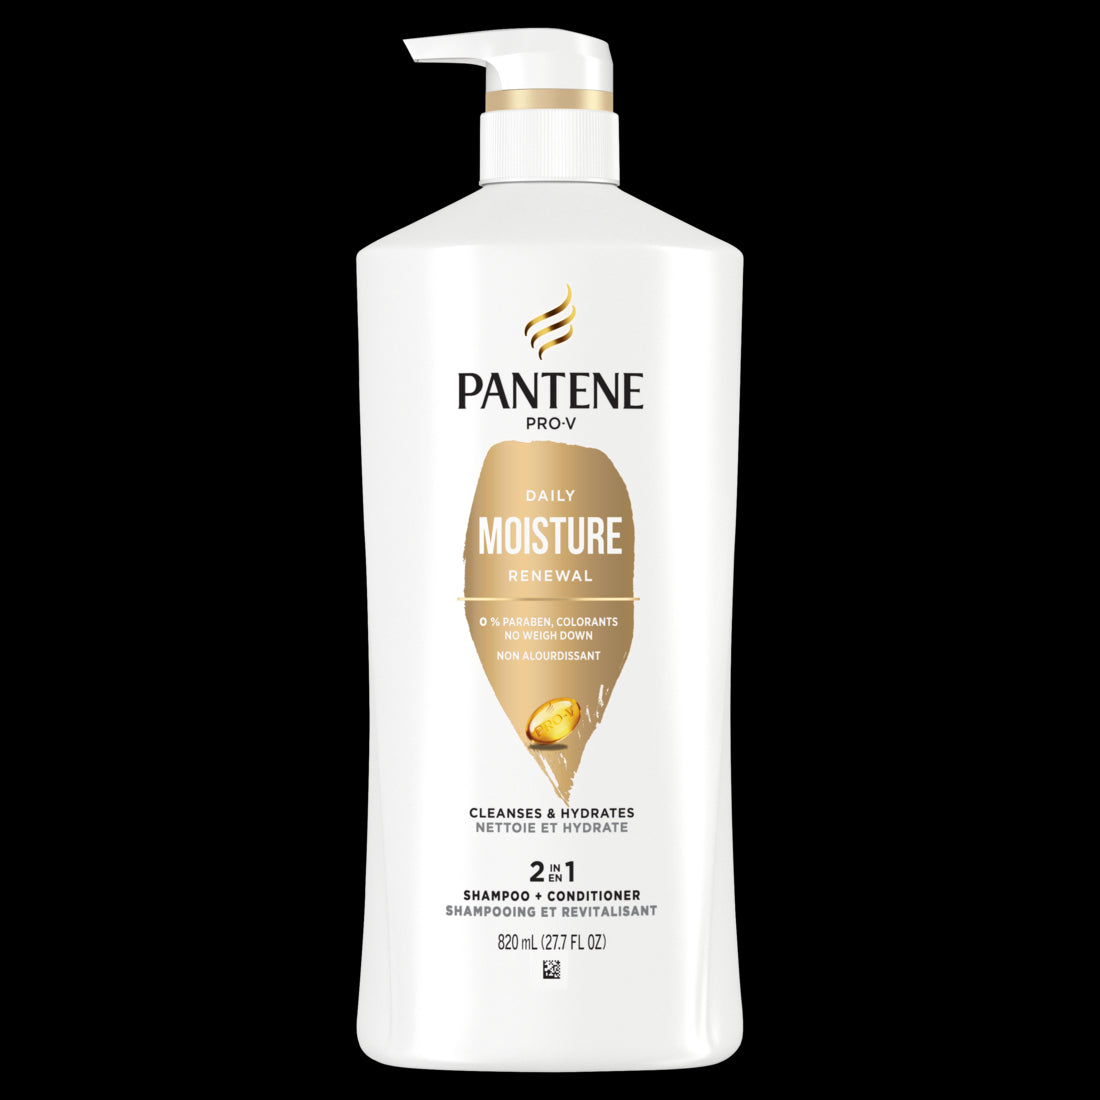 PANTENE PRO-V Daily Moisture Renewal 2 in 1 Shampoo + Conditioner- 27.7 oz/820ml/4pk